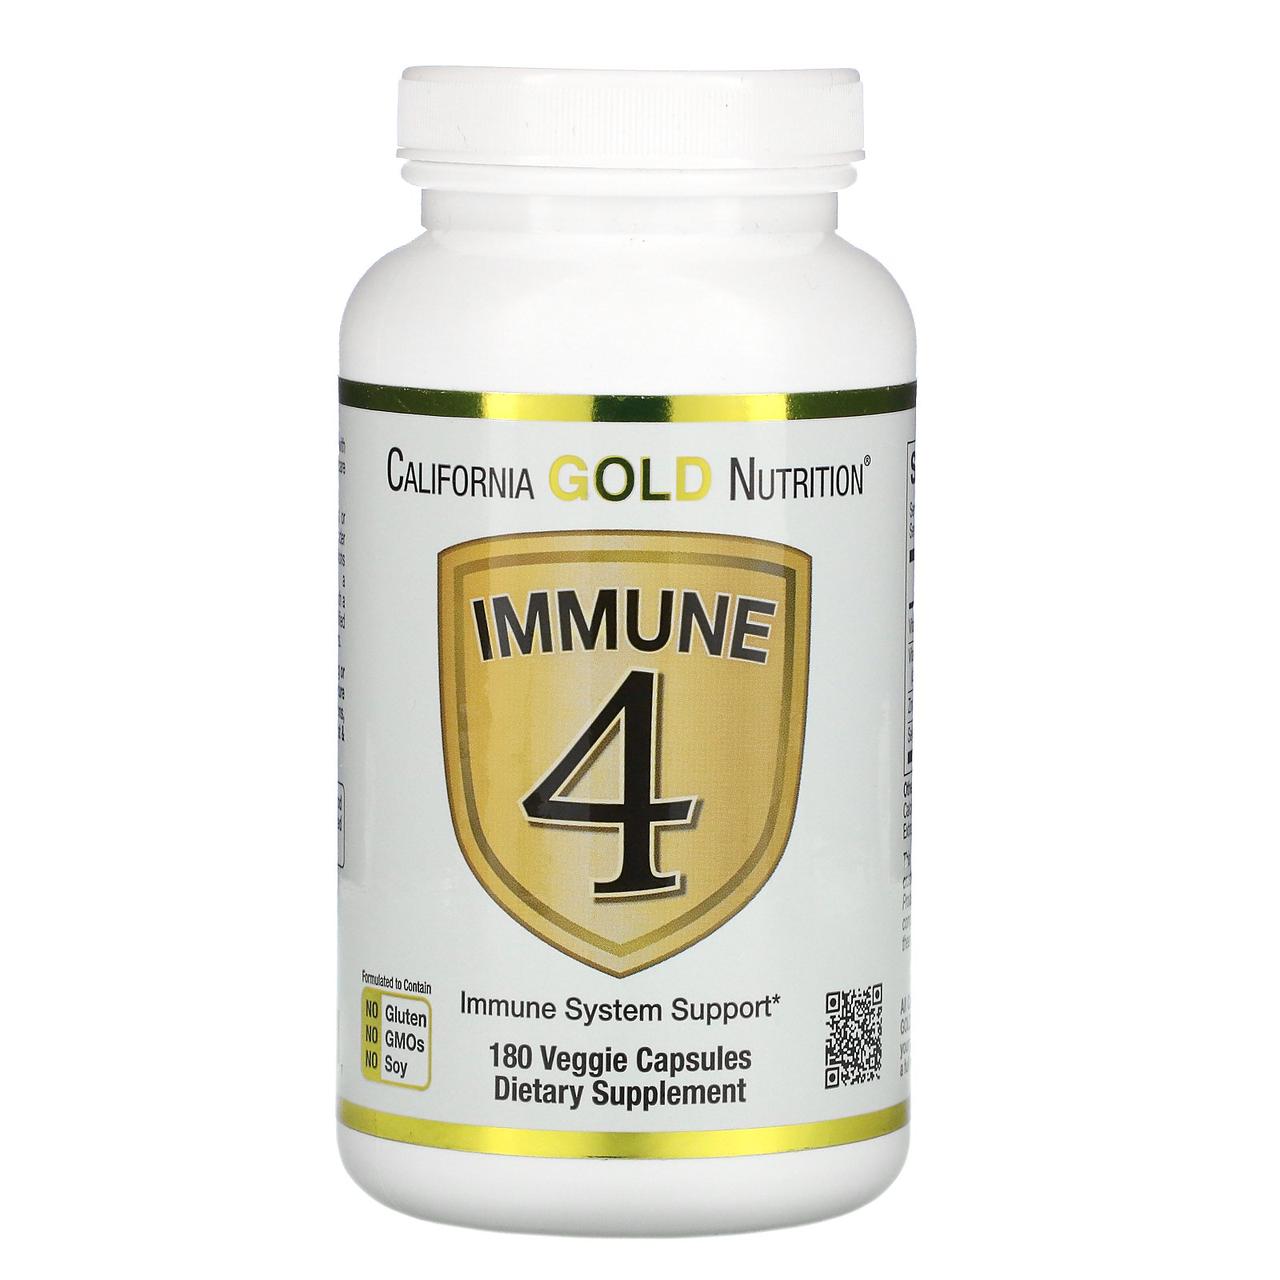 Immune 4 вітамін С, Д з цинком і селеном 180 вегетаріанських капсул, California Gold Nutrition